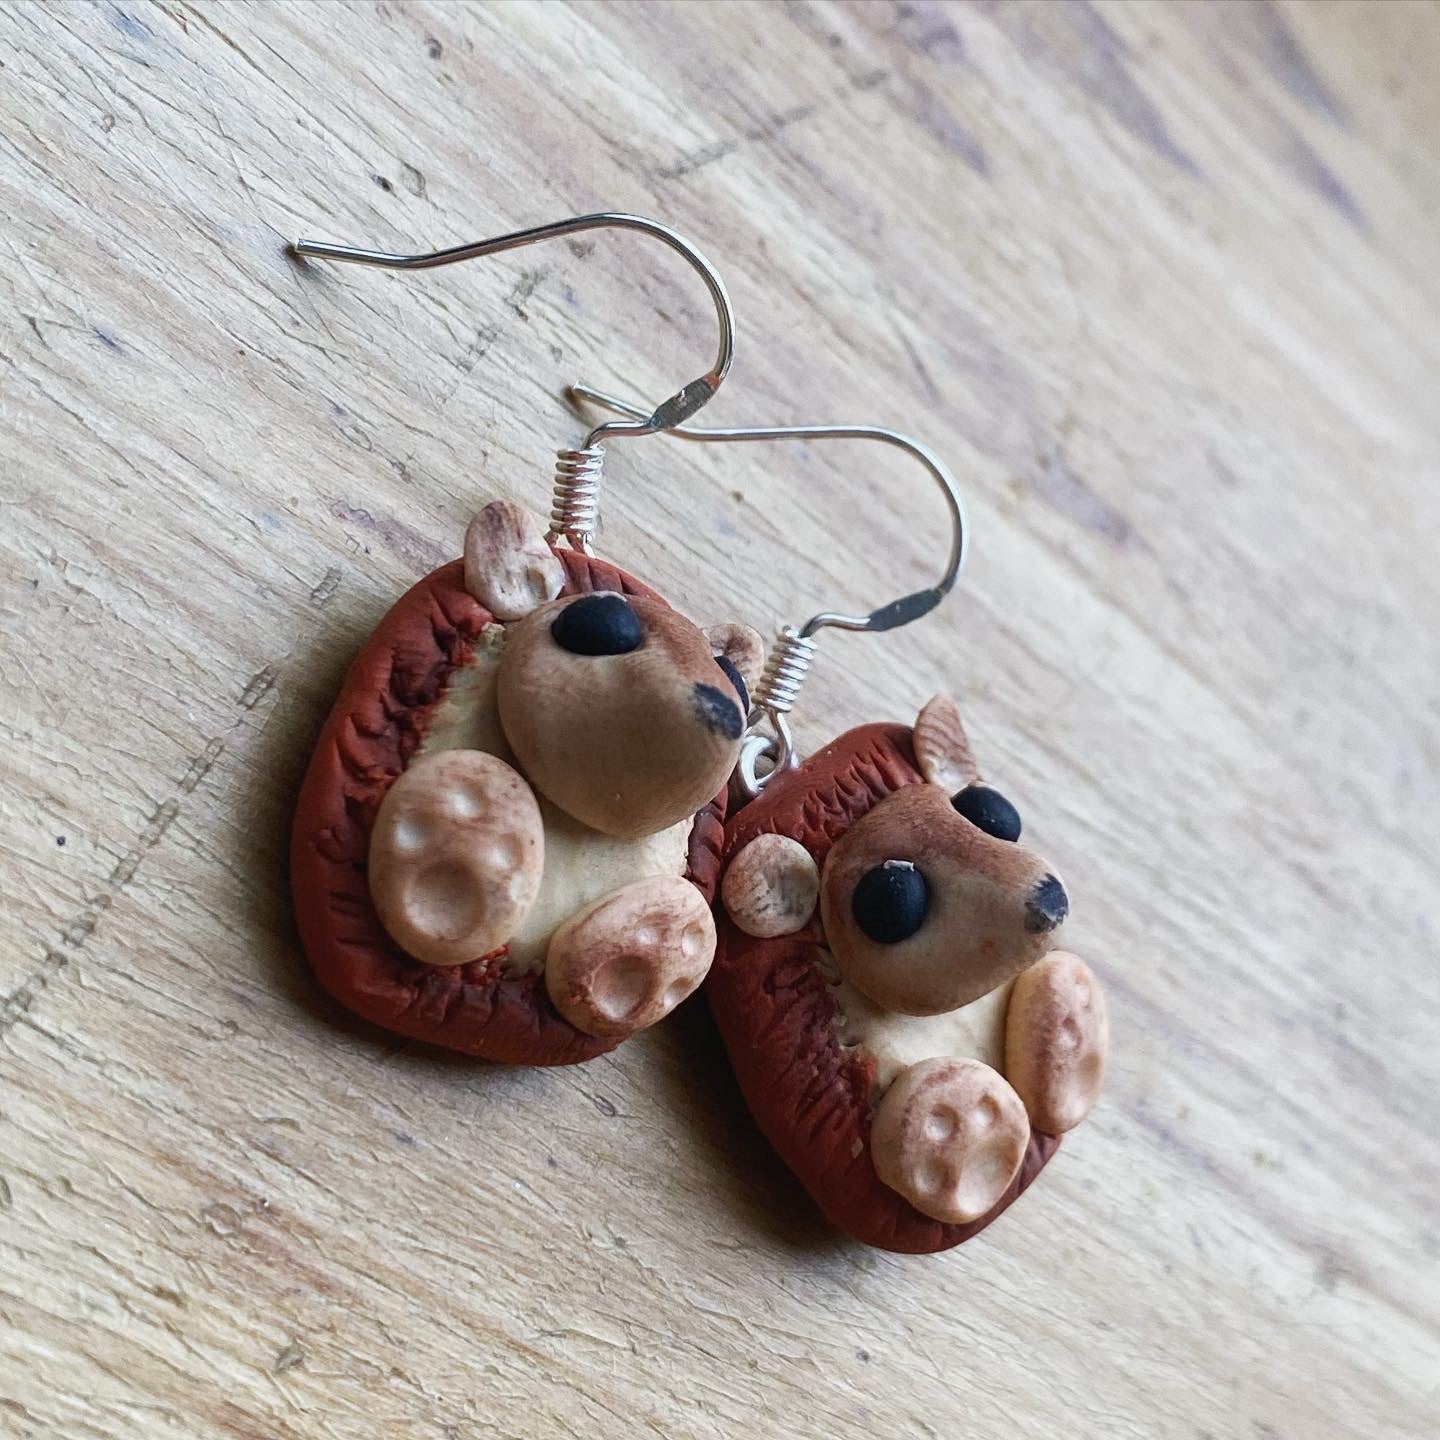 Handmade Earrings | Hedgehogs | Polymer Clay